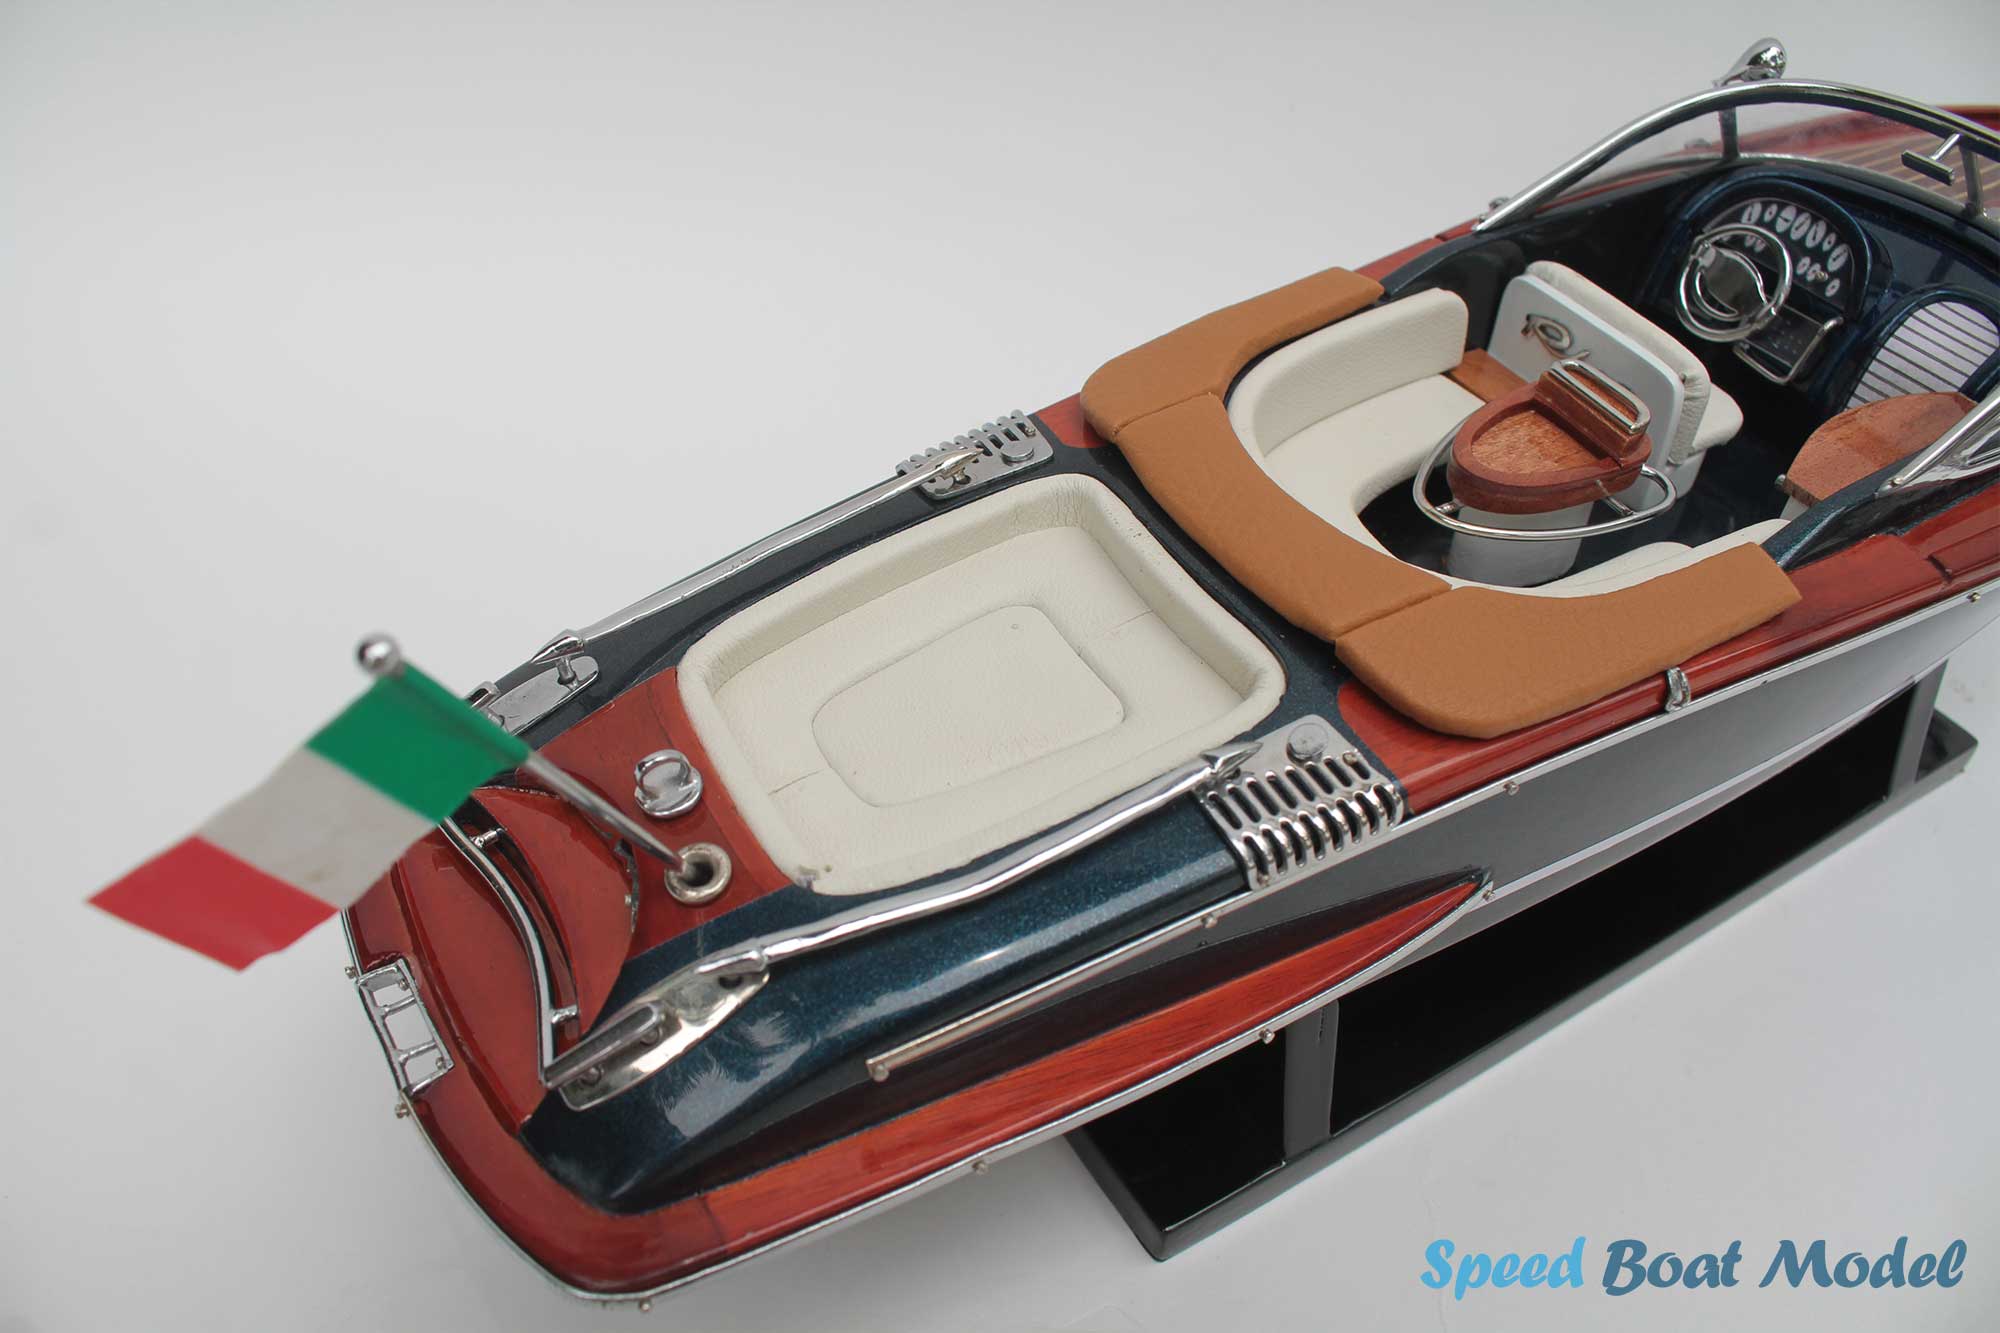 Italian Riva Aquariva Gucci Speed Boat Model 16.5